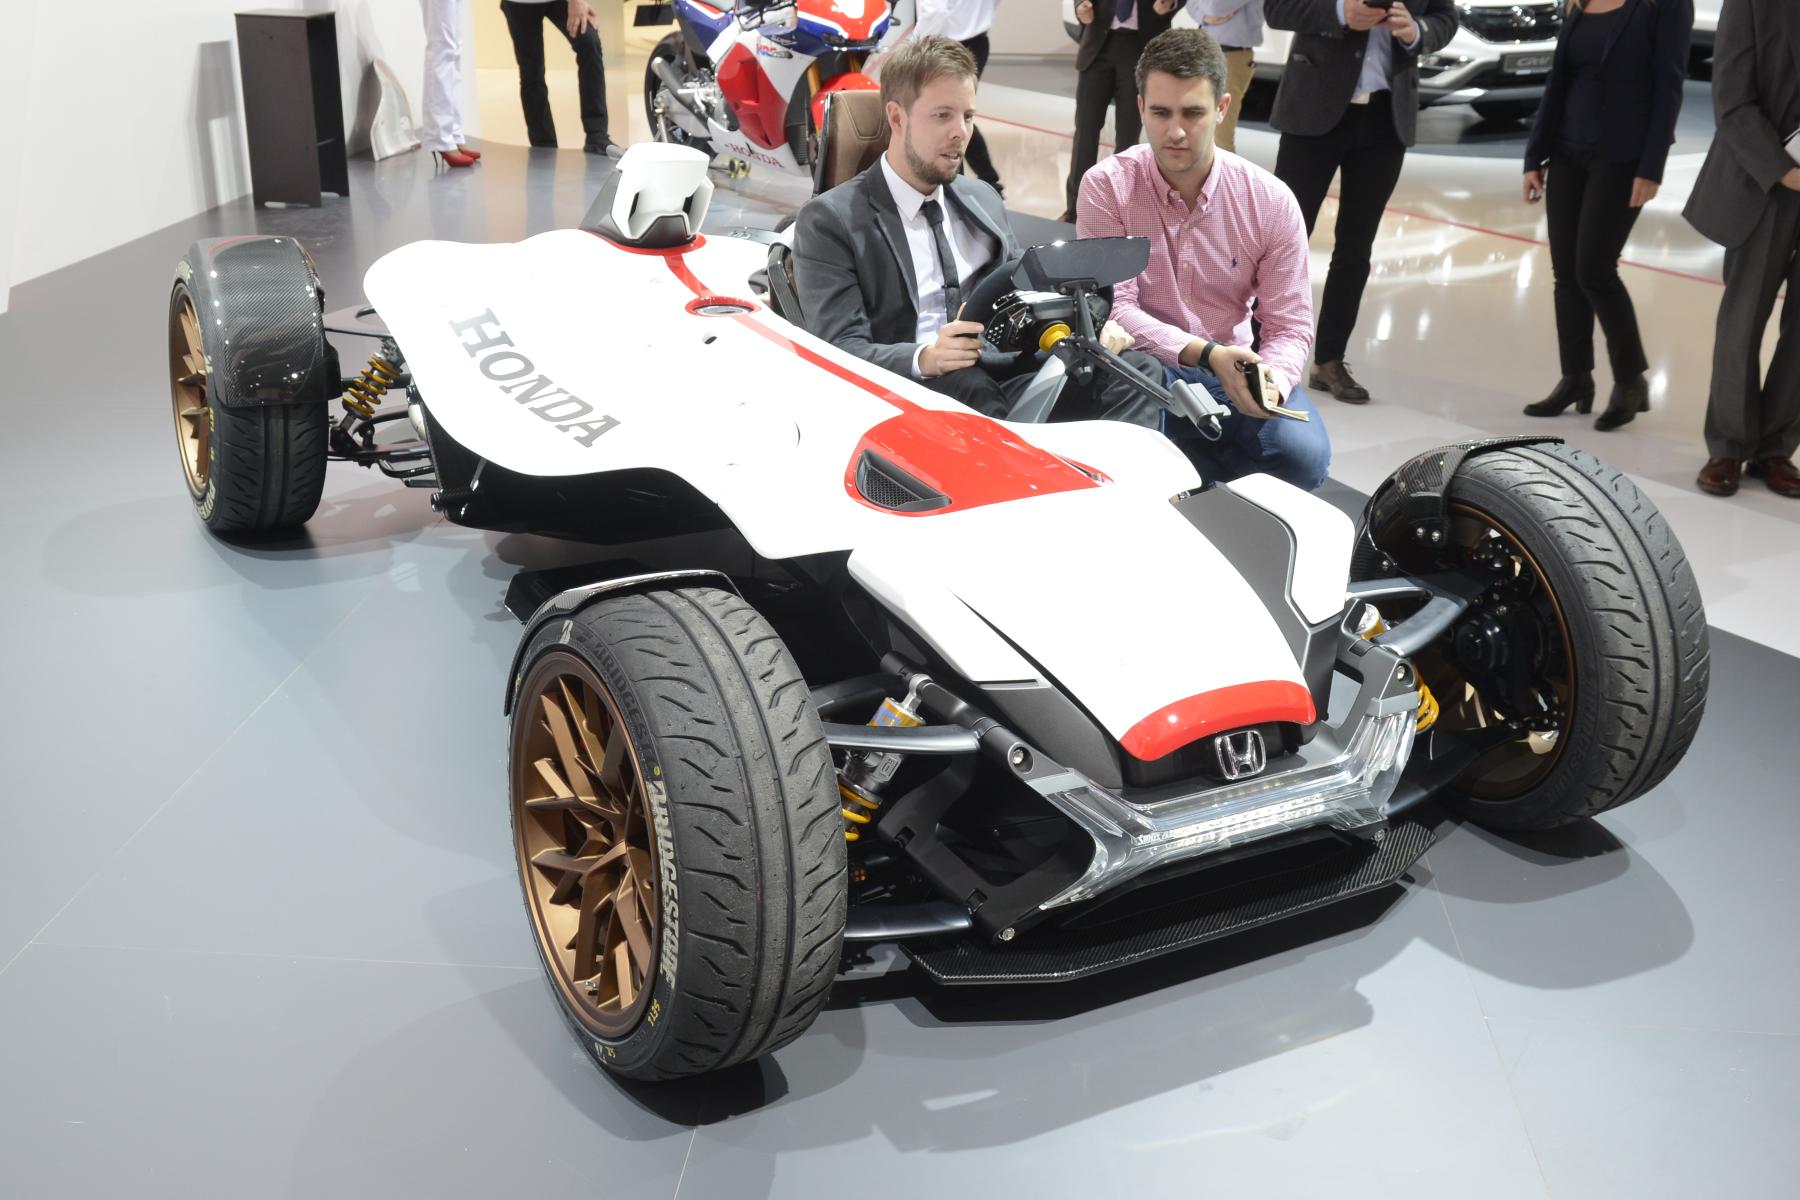 2015 Frankfurt motor show: Honda Project 2&4